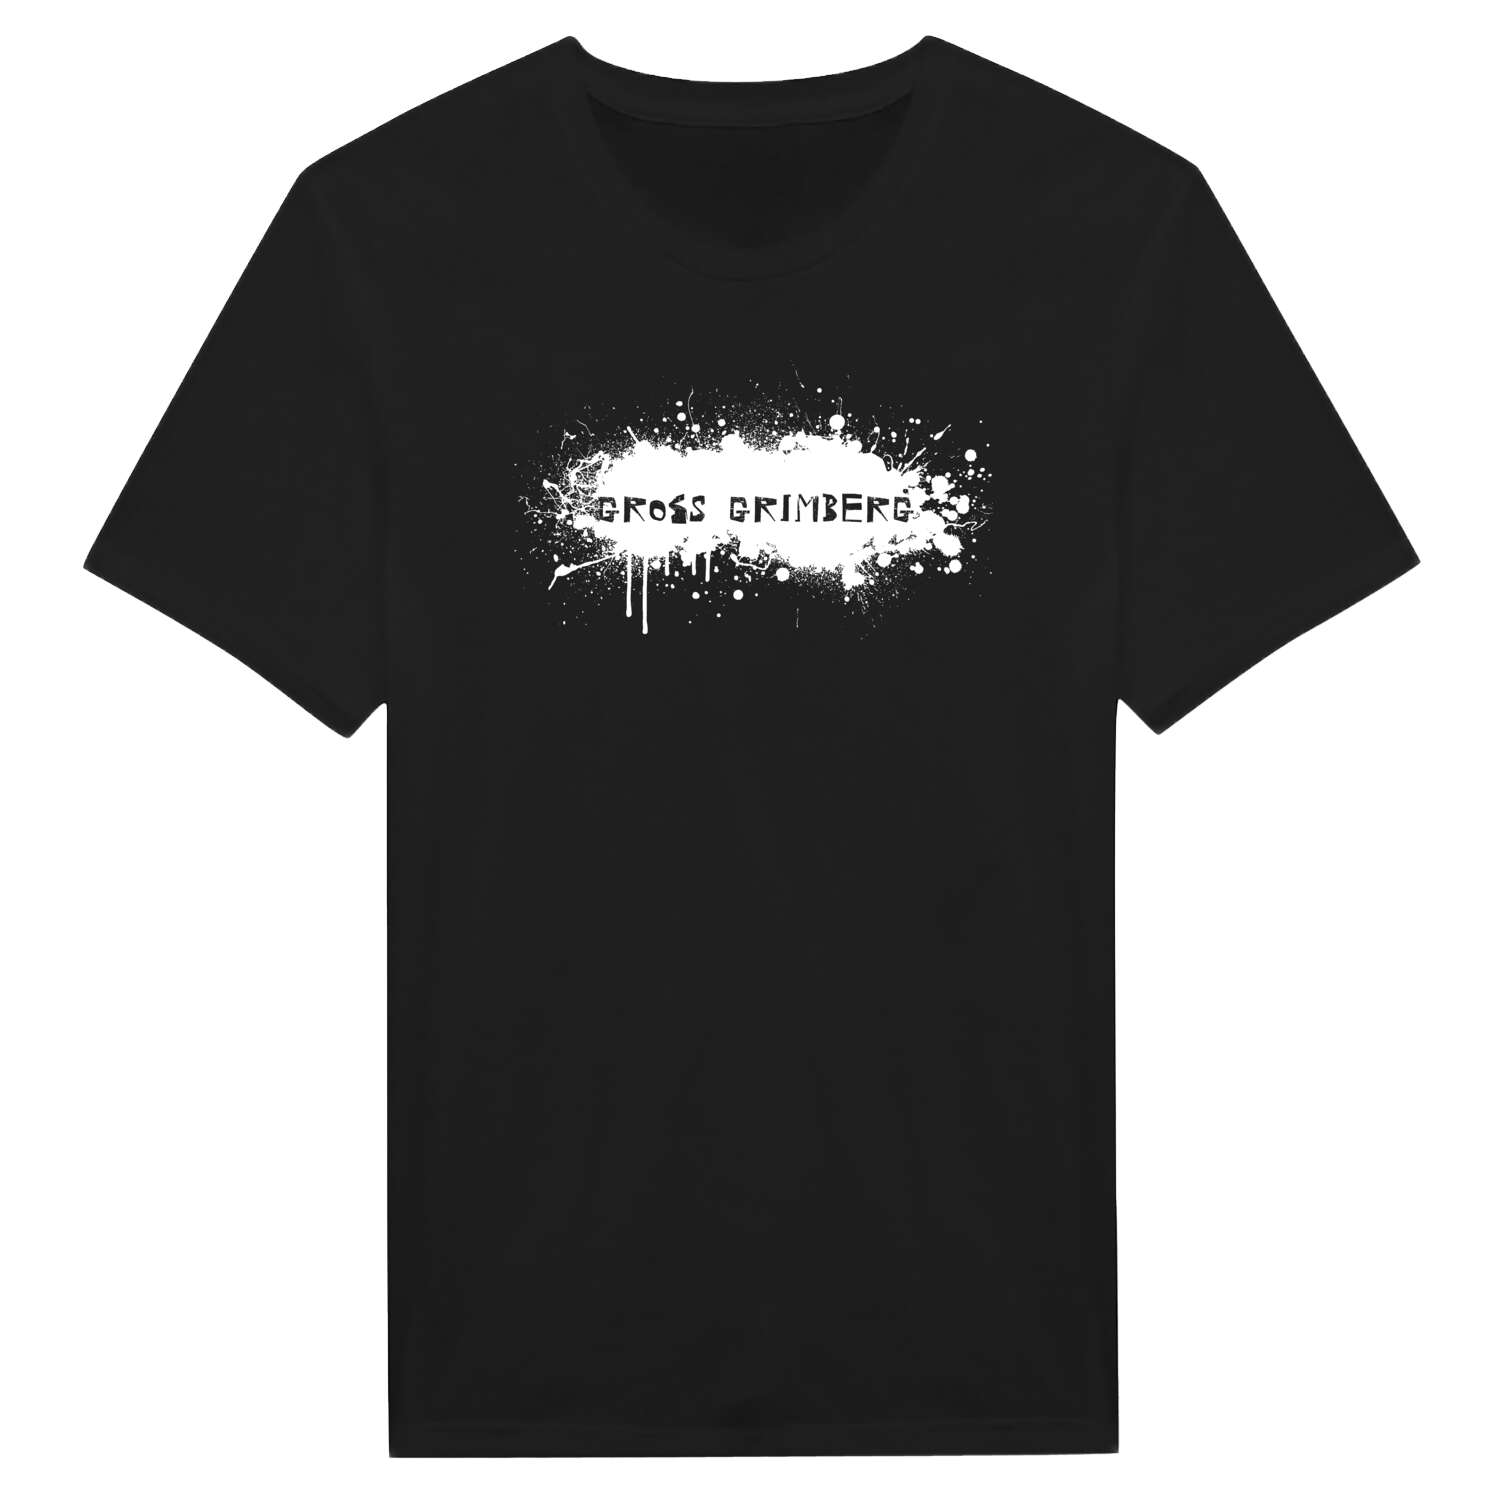 Groß Grimberg T-Shirt »Paint Splash Punk«